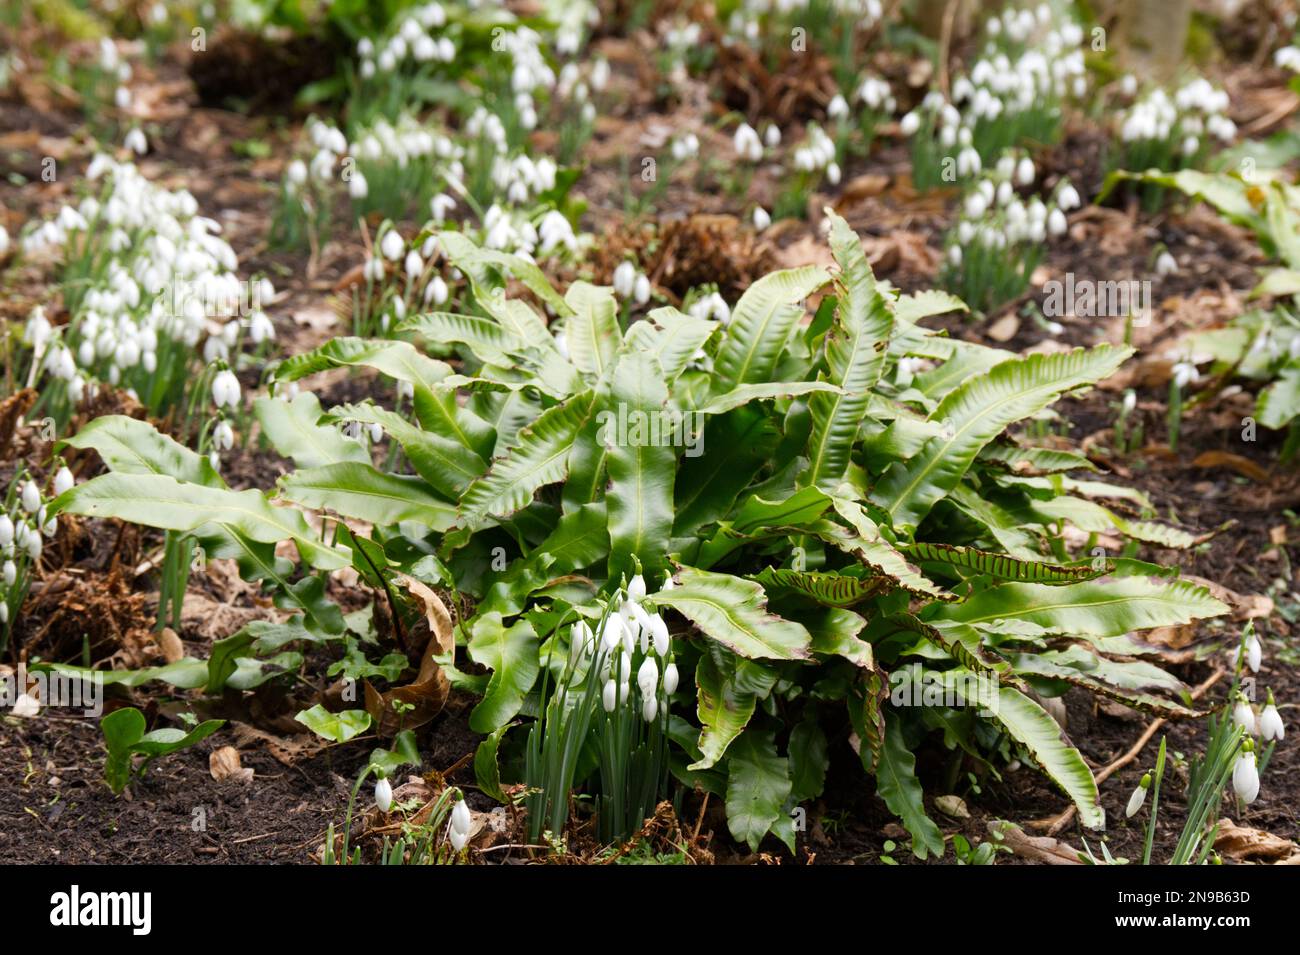 winter snowdrops, galanthus nivalis and hart's tongue fern, Asplenium scolopendrium in UK woodland garden February Stock Photo